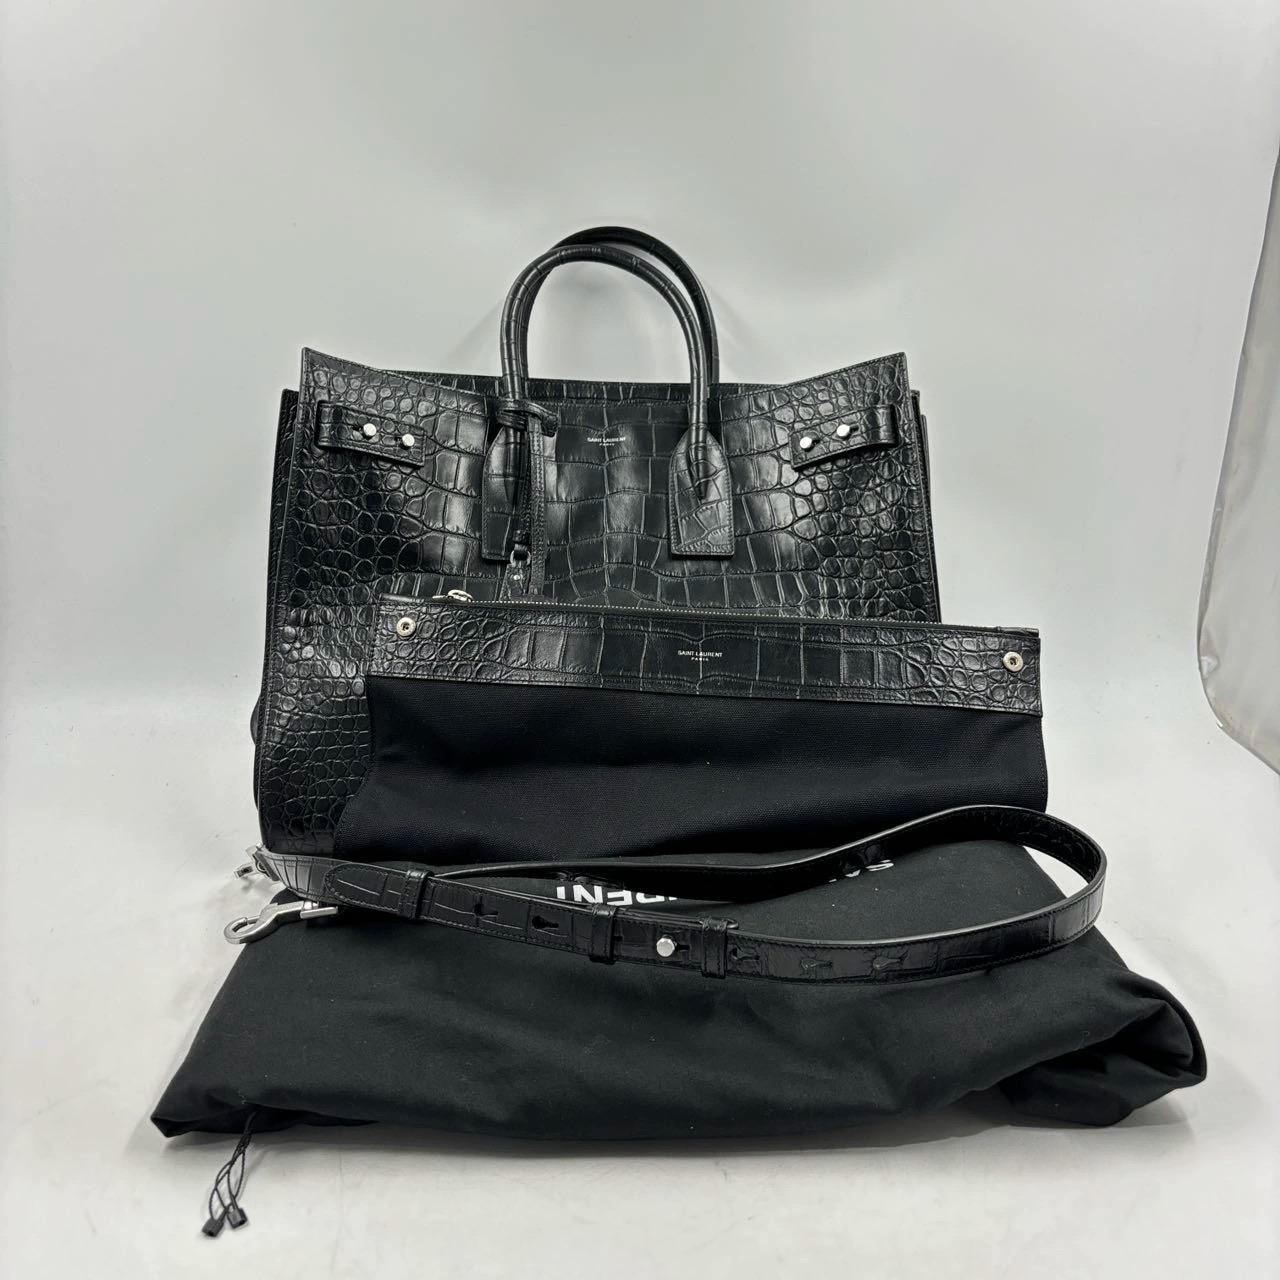 Saint Laurent Sac De Jour Large Black Crocodile-embossed Leather Handbag For Sale 2